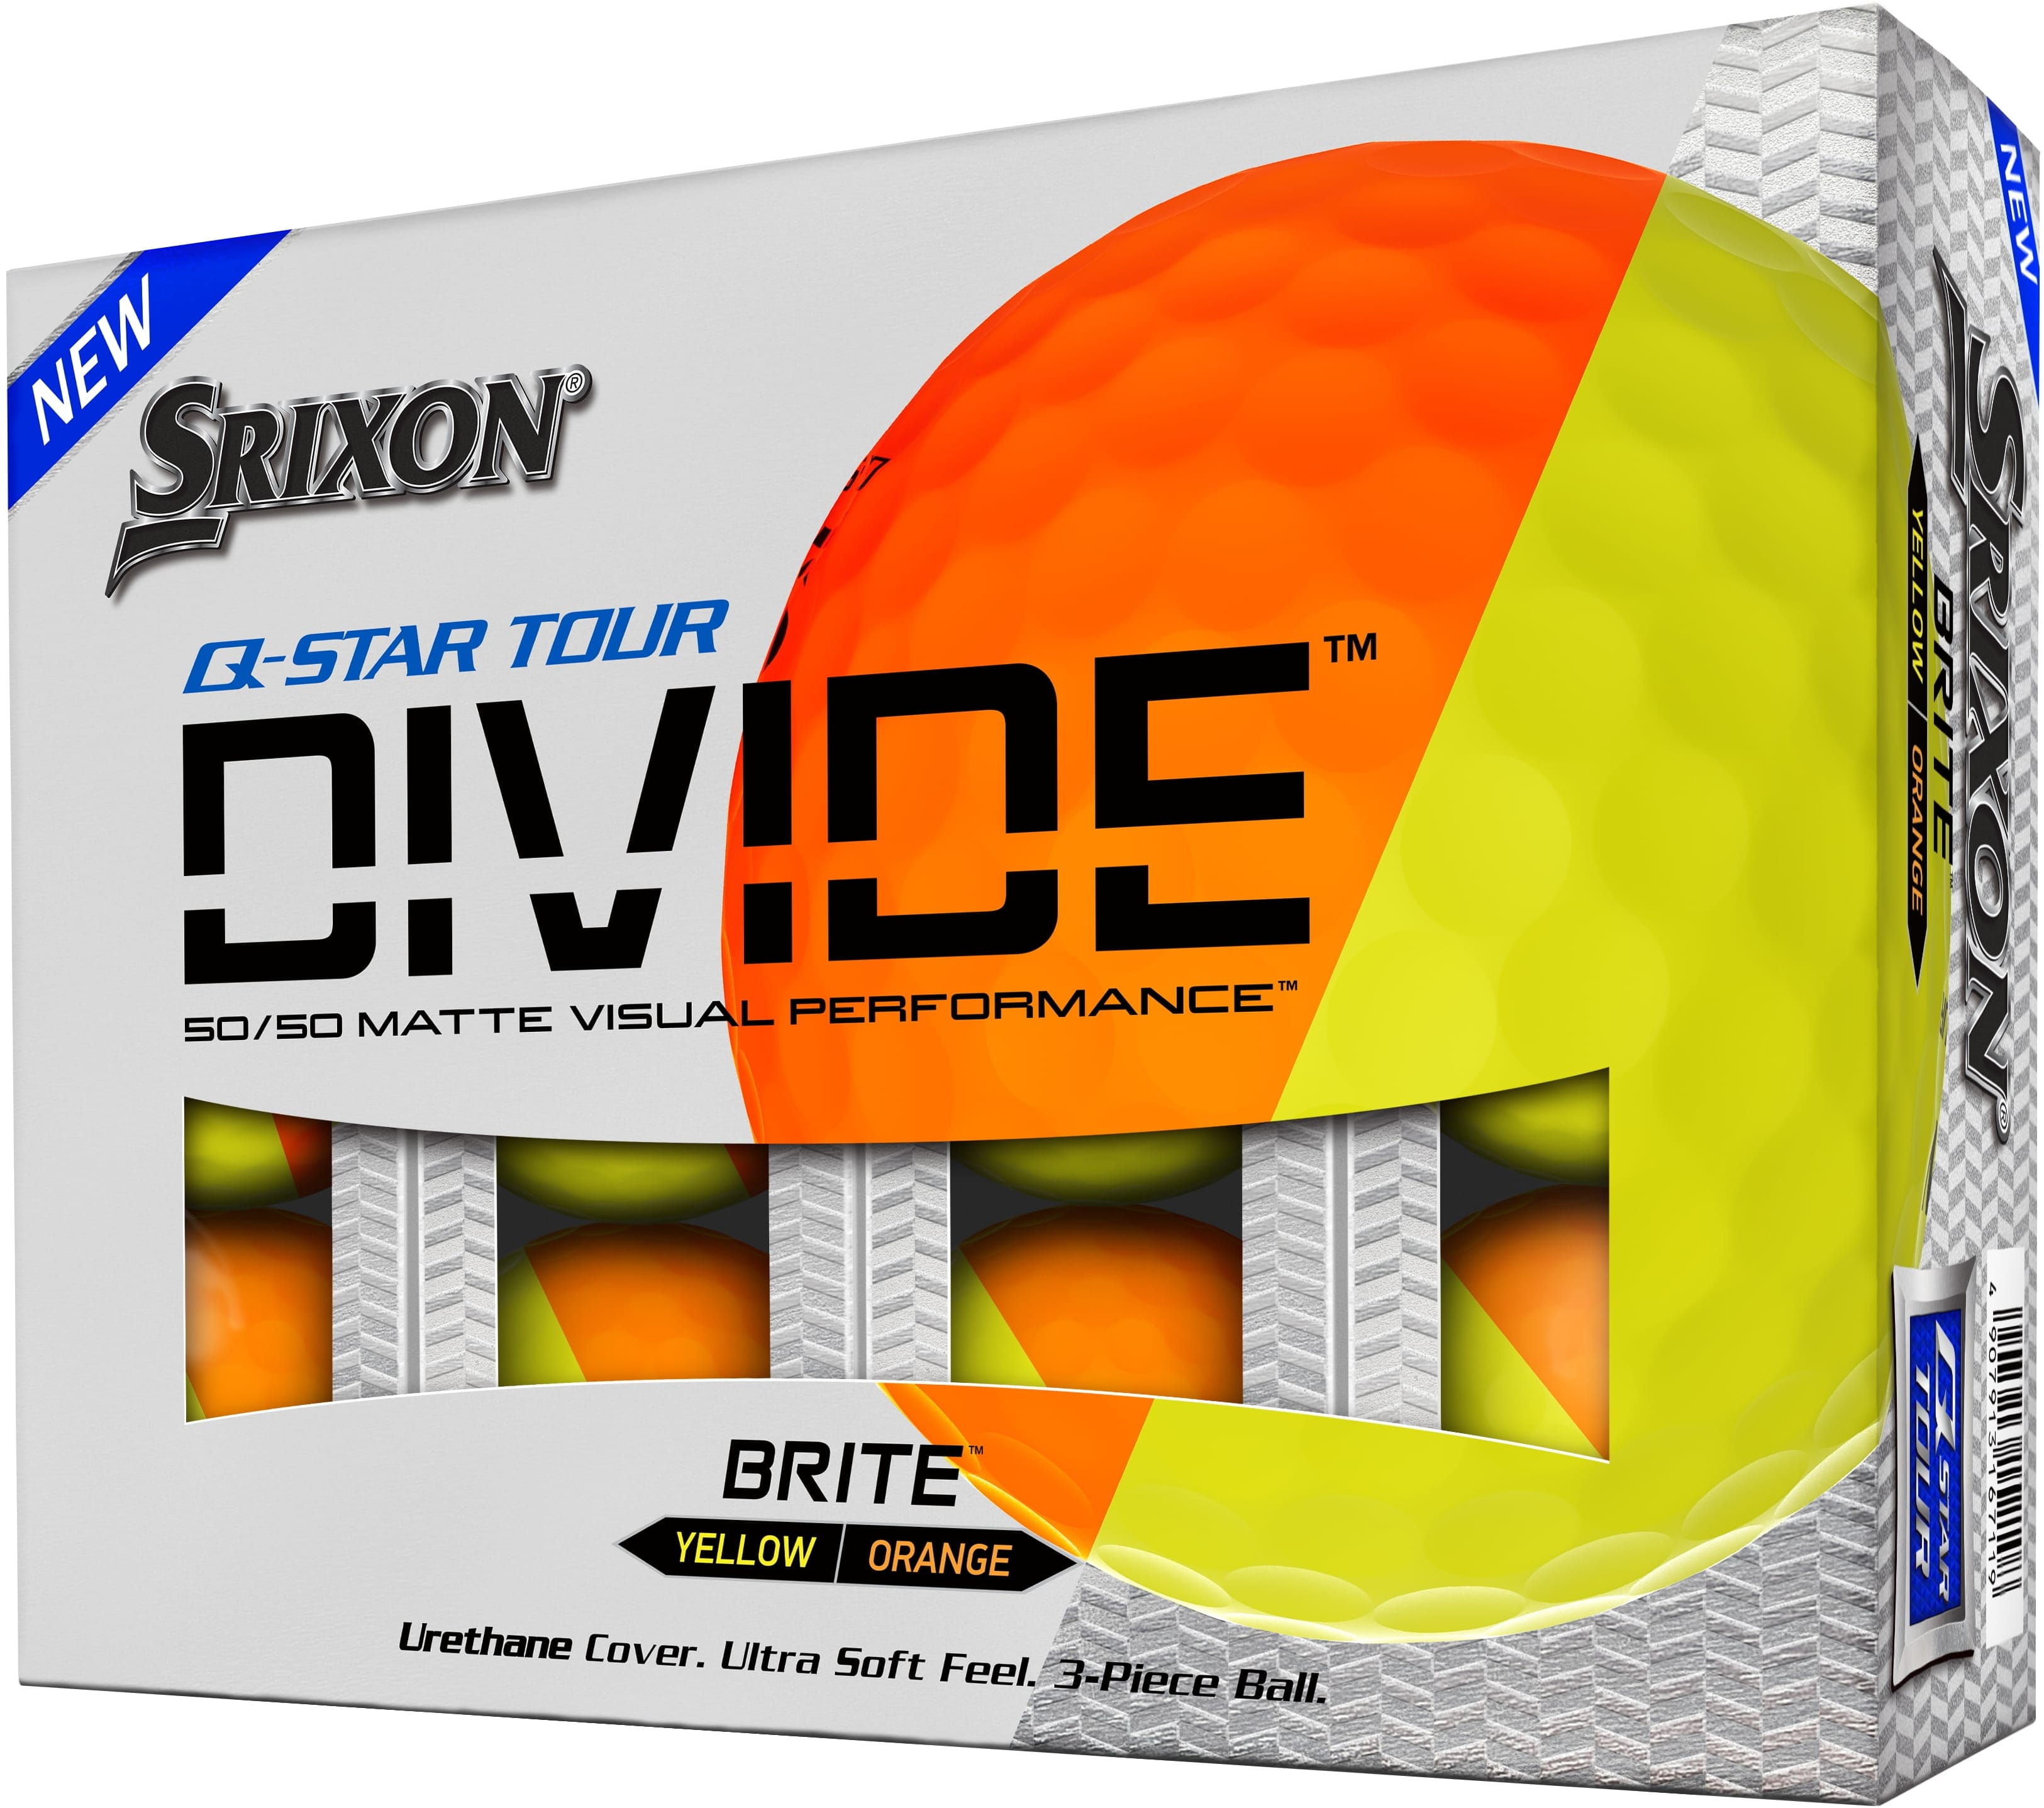 Srixon Q-Star Tour DIVIDE Golfbälle, yellow/orange